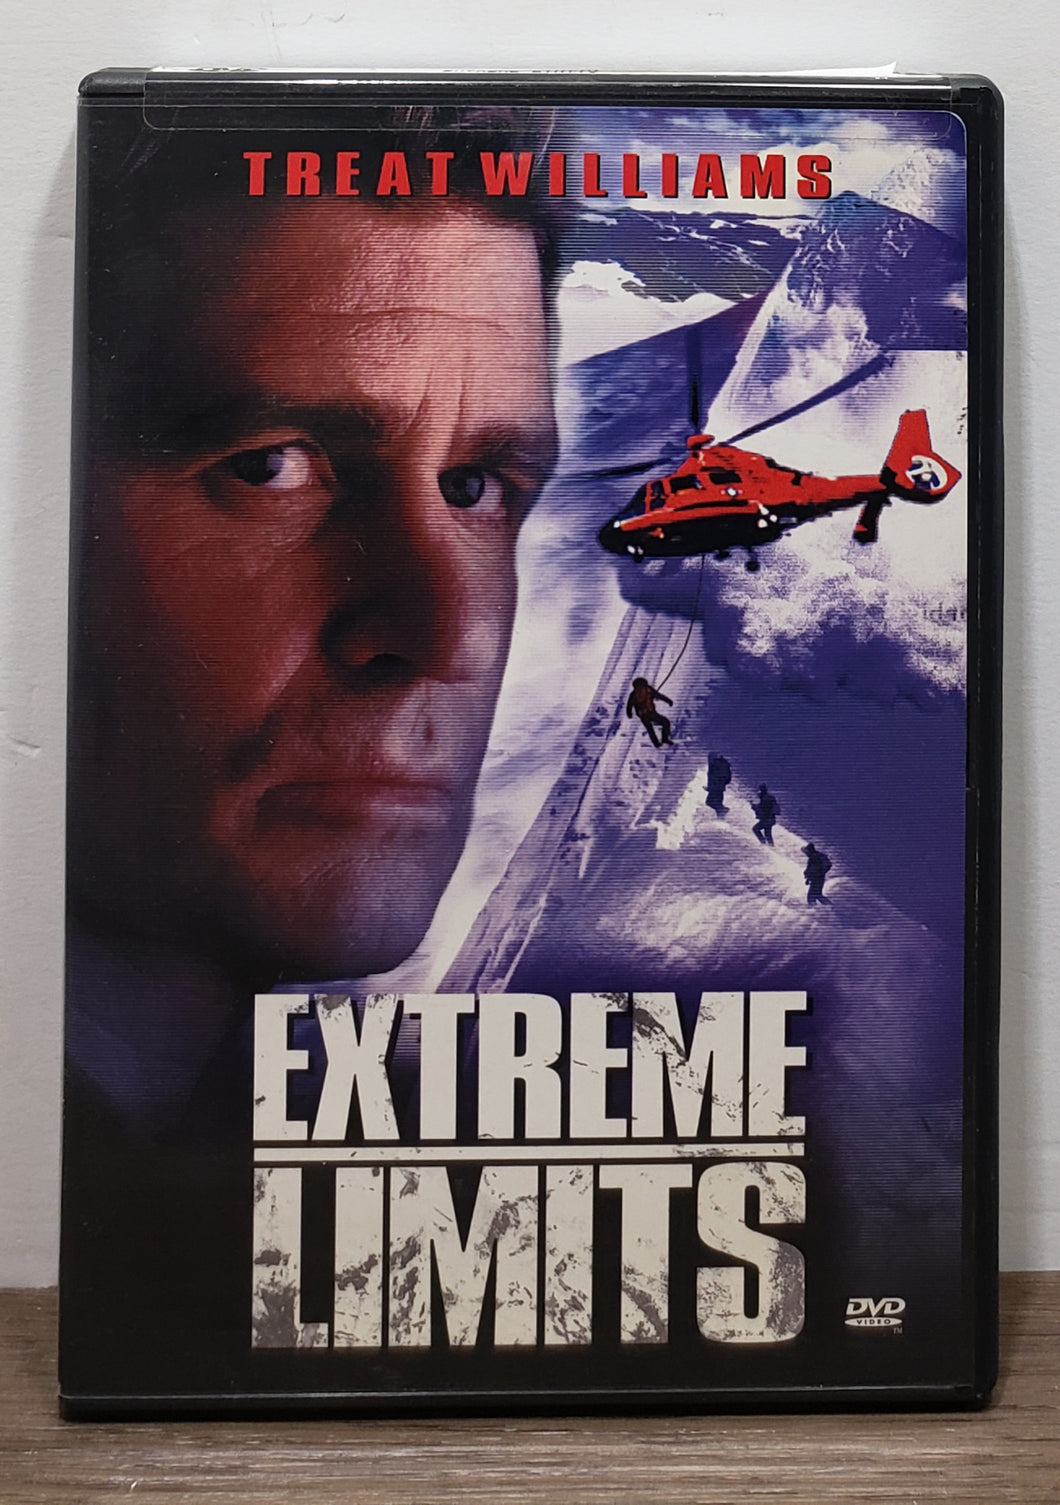 Extreme Limits